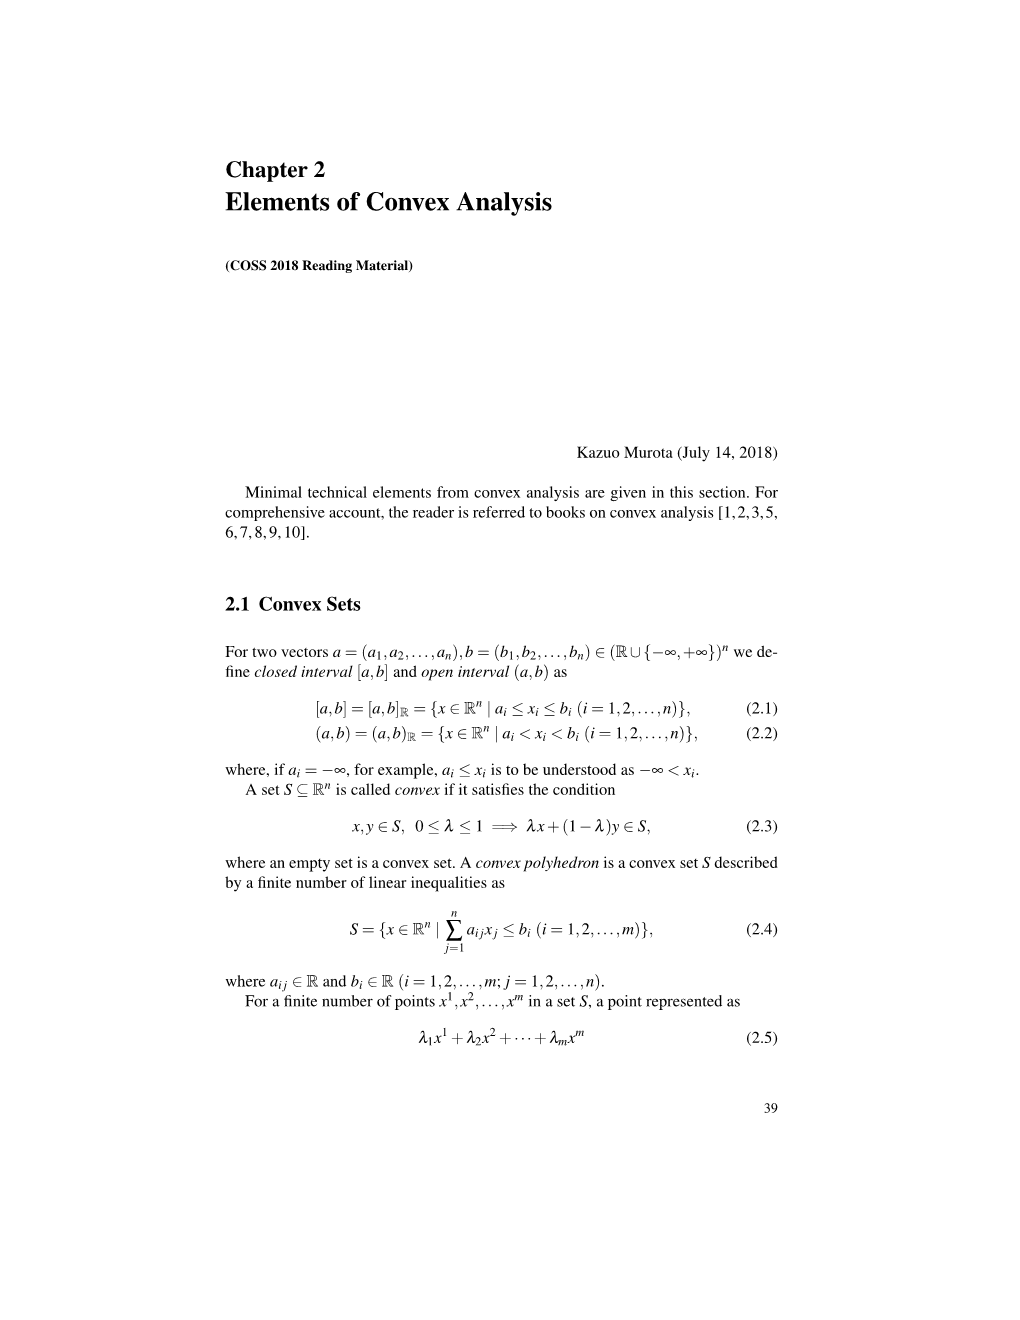 Elements of Convex Analysis